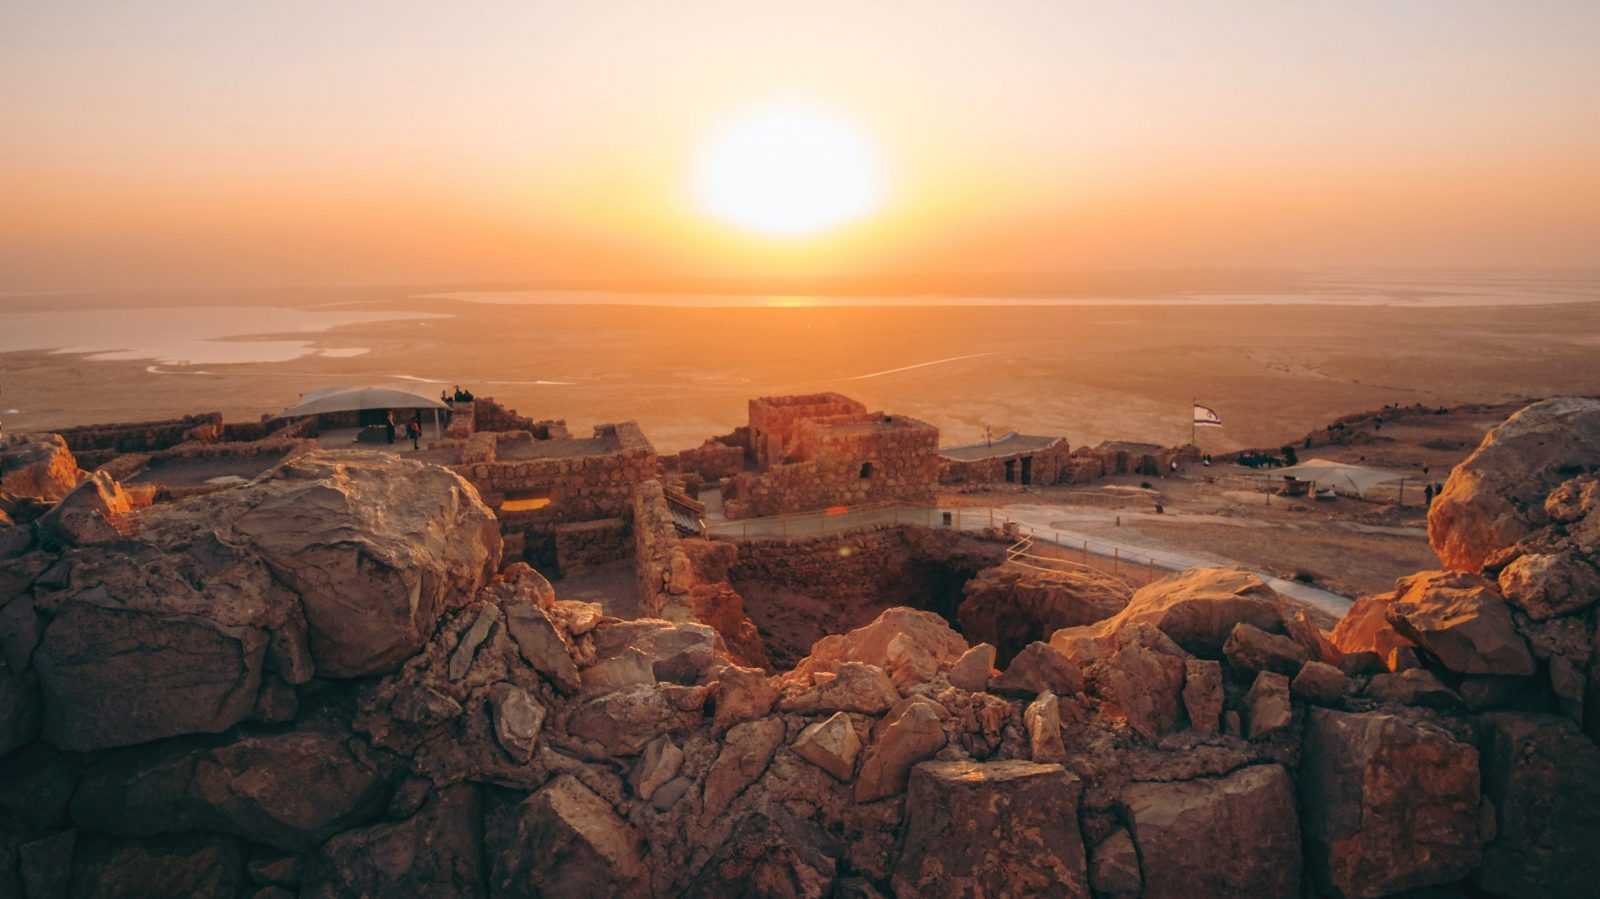 Sunrise over Masada National Park